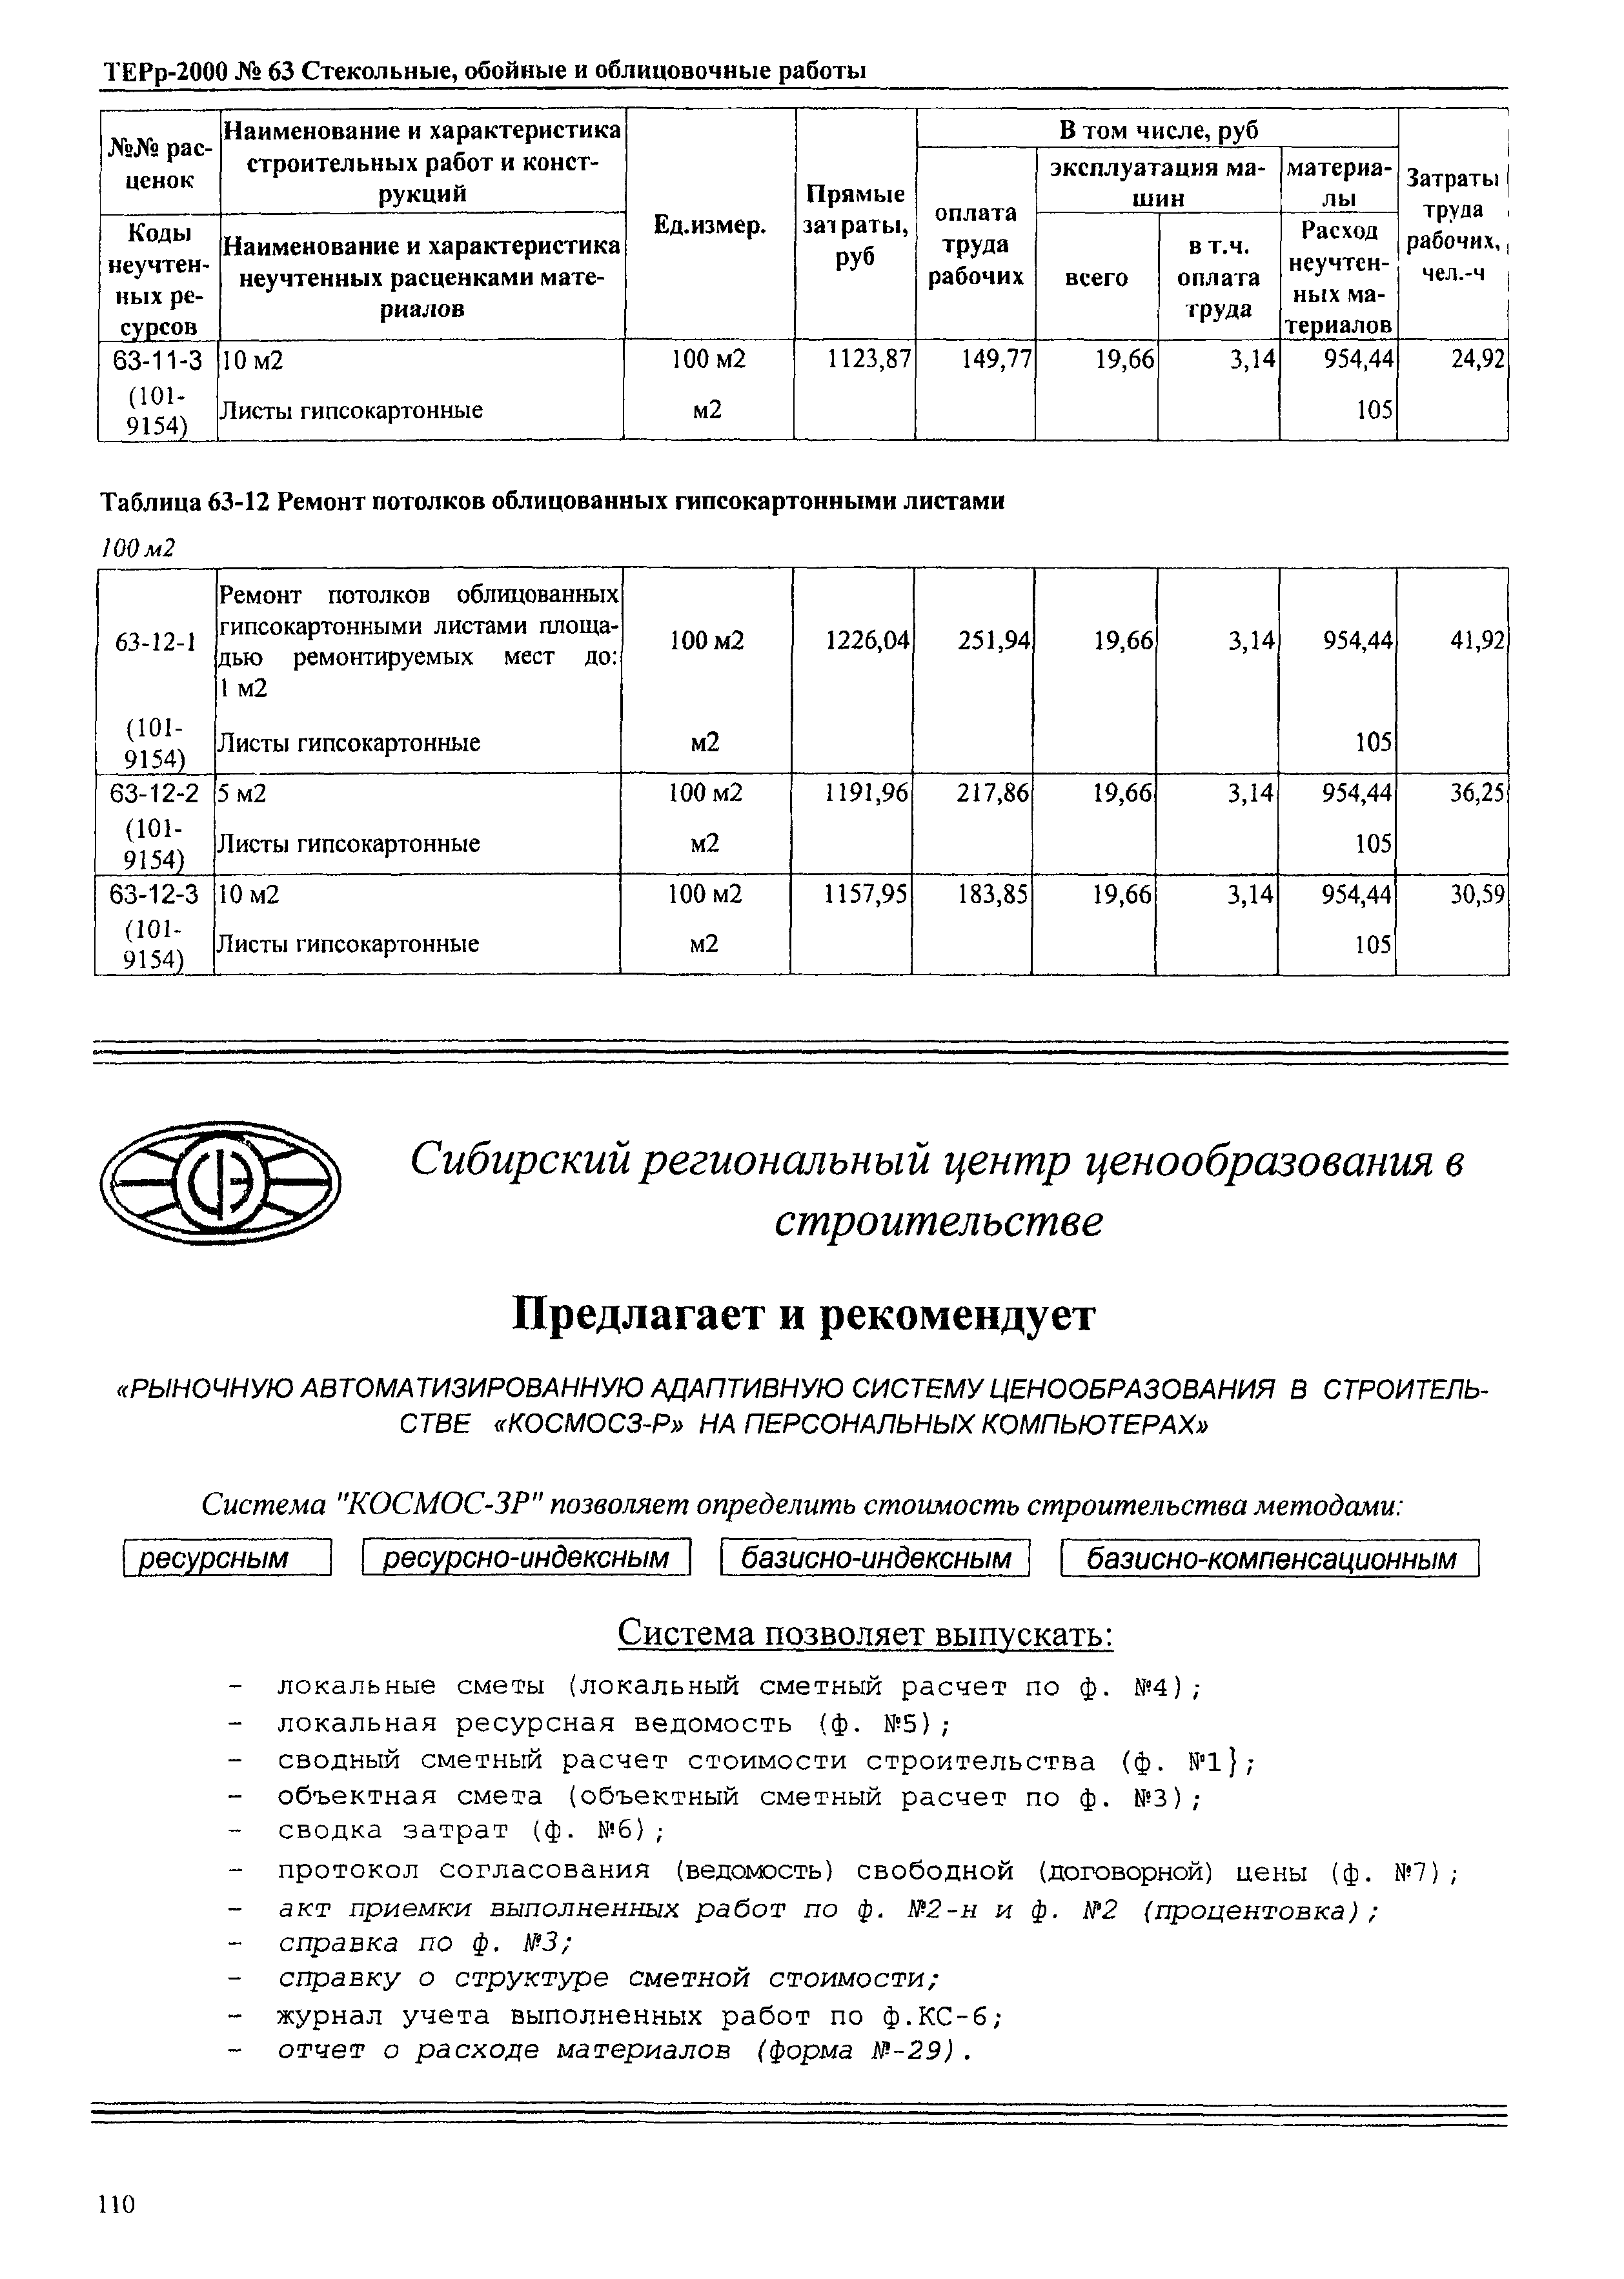 ТЕРр Омской области 2000-63